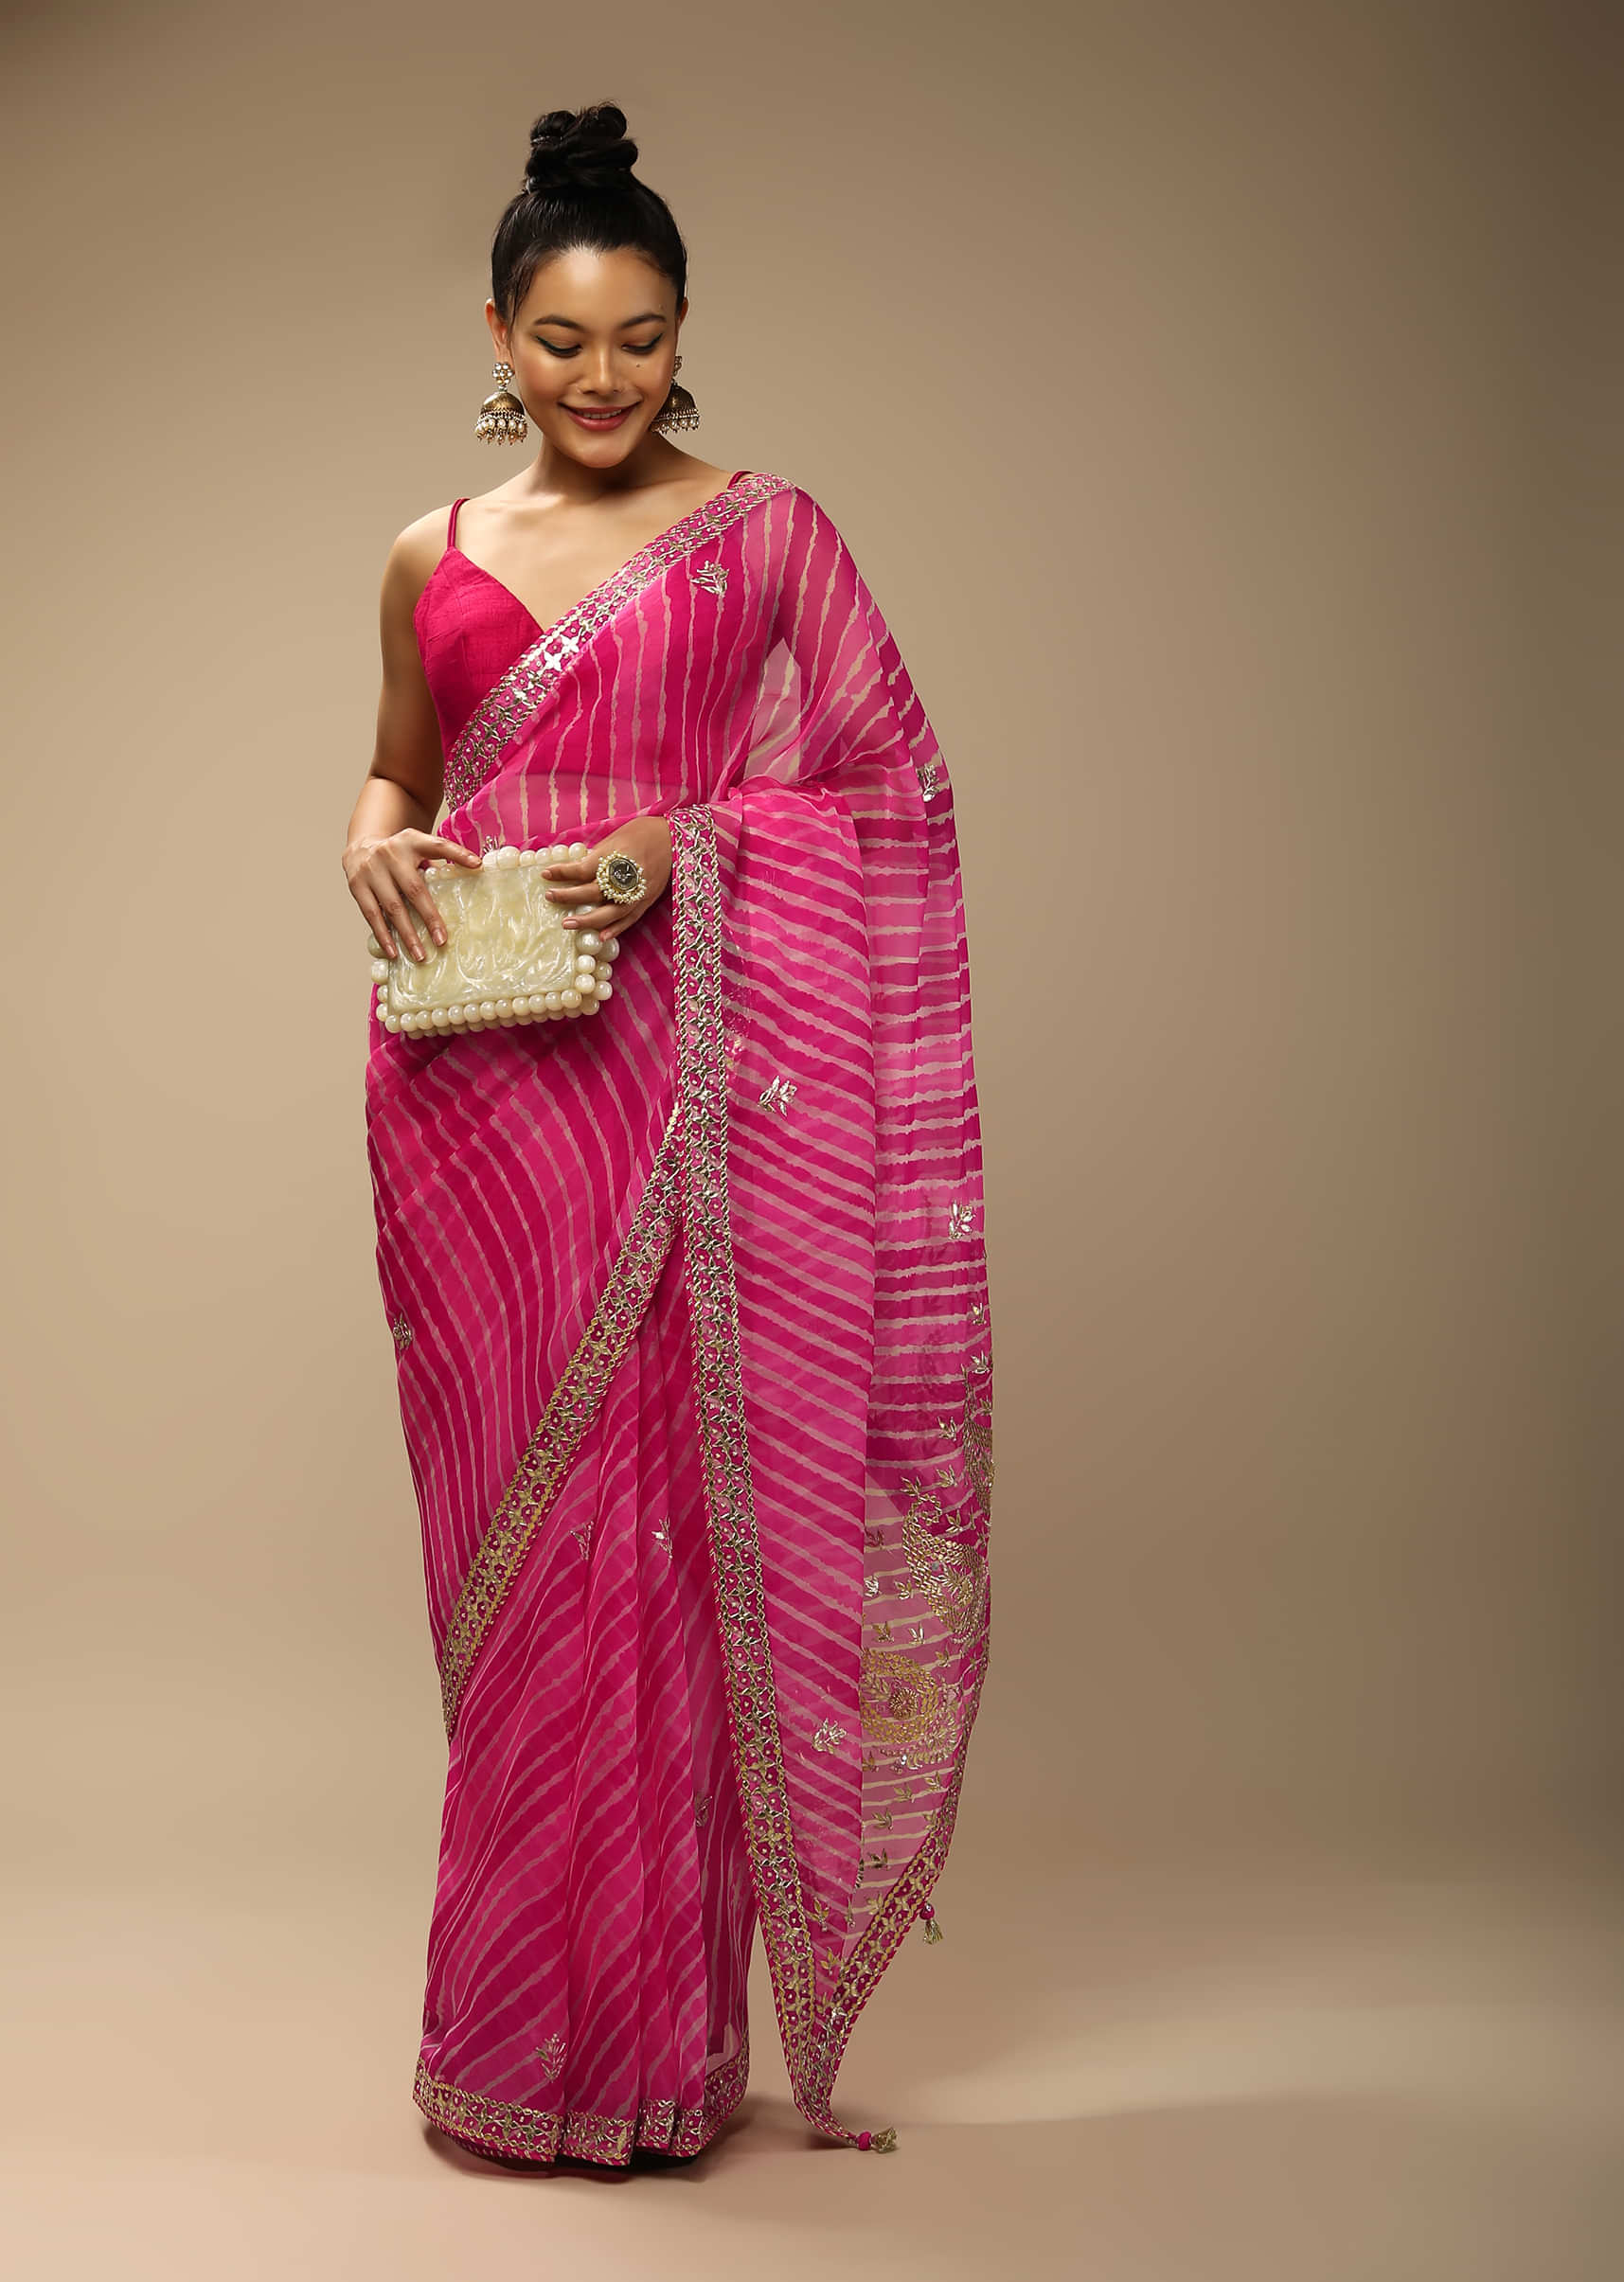 Magenta Dual Toned Saree In Organza With Lehariya Print And Gotta Patti Embroidered Paisley Motifs On The Pallu